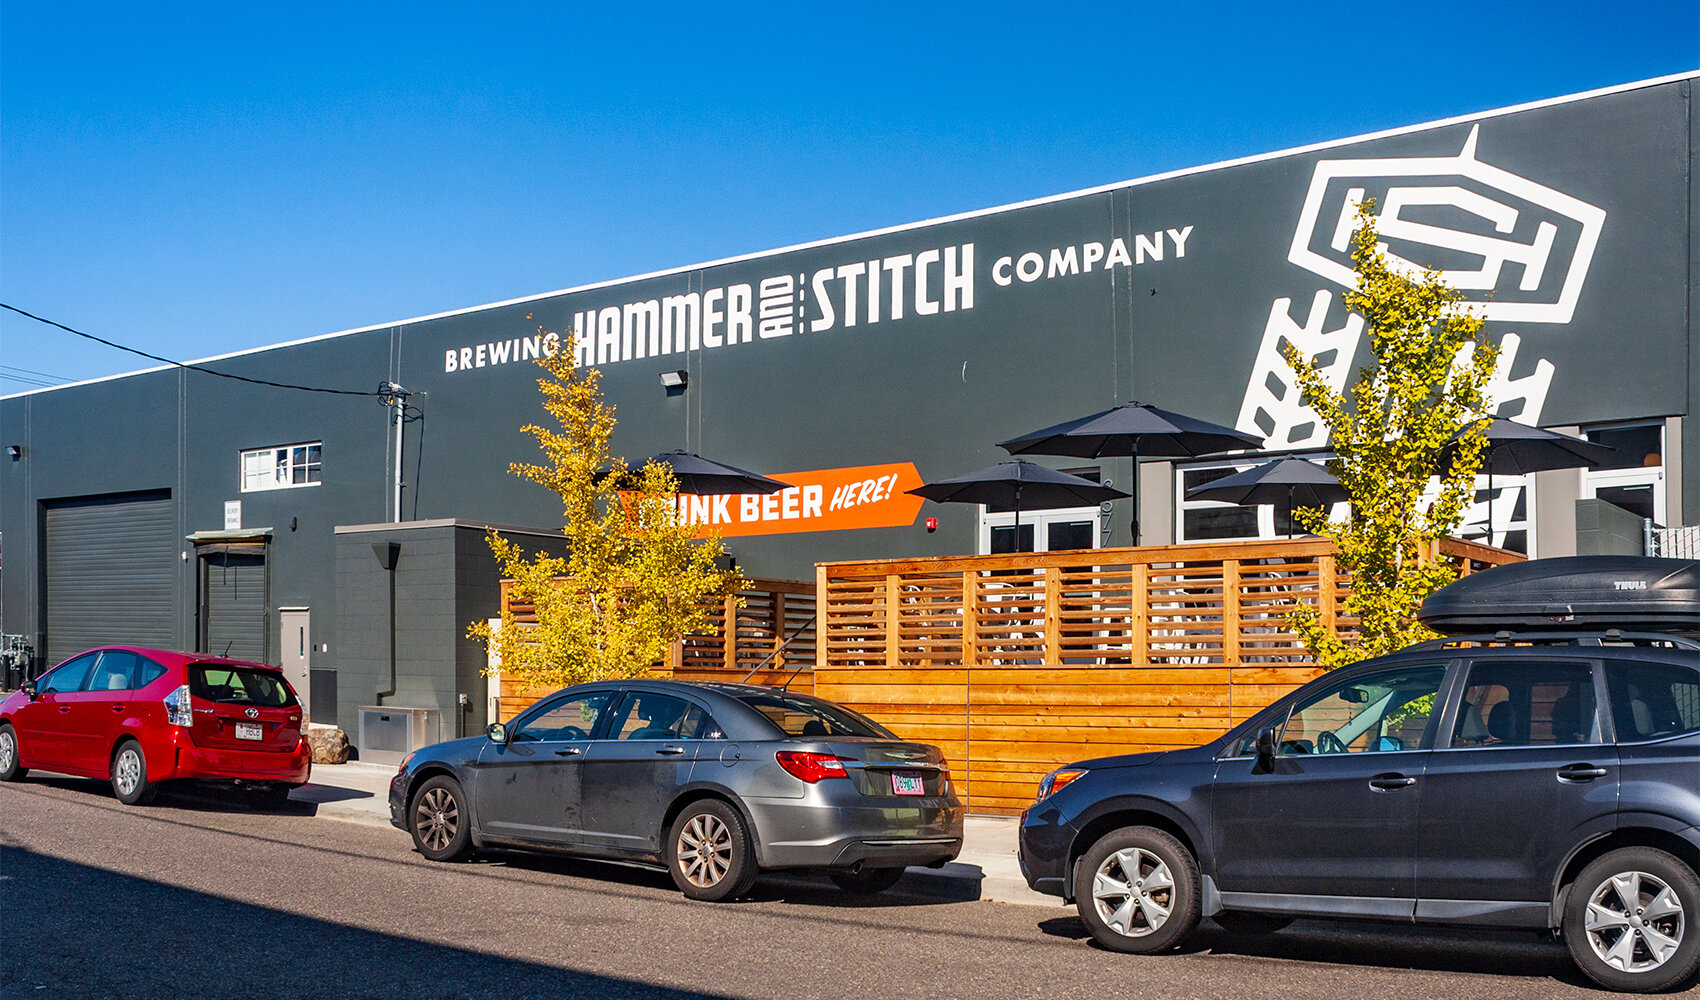 Hammer & Stitch Brewing Company